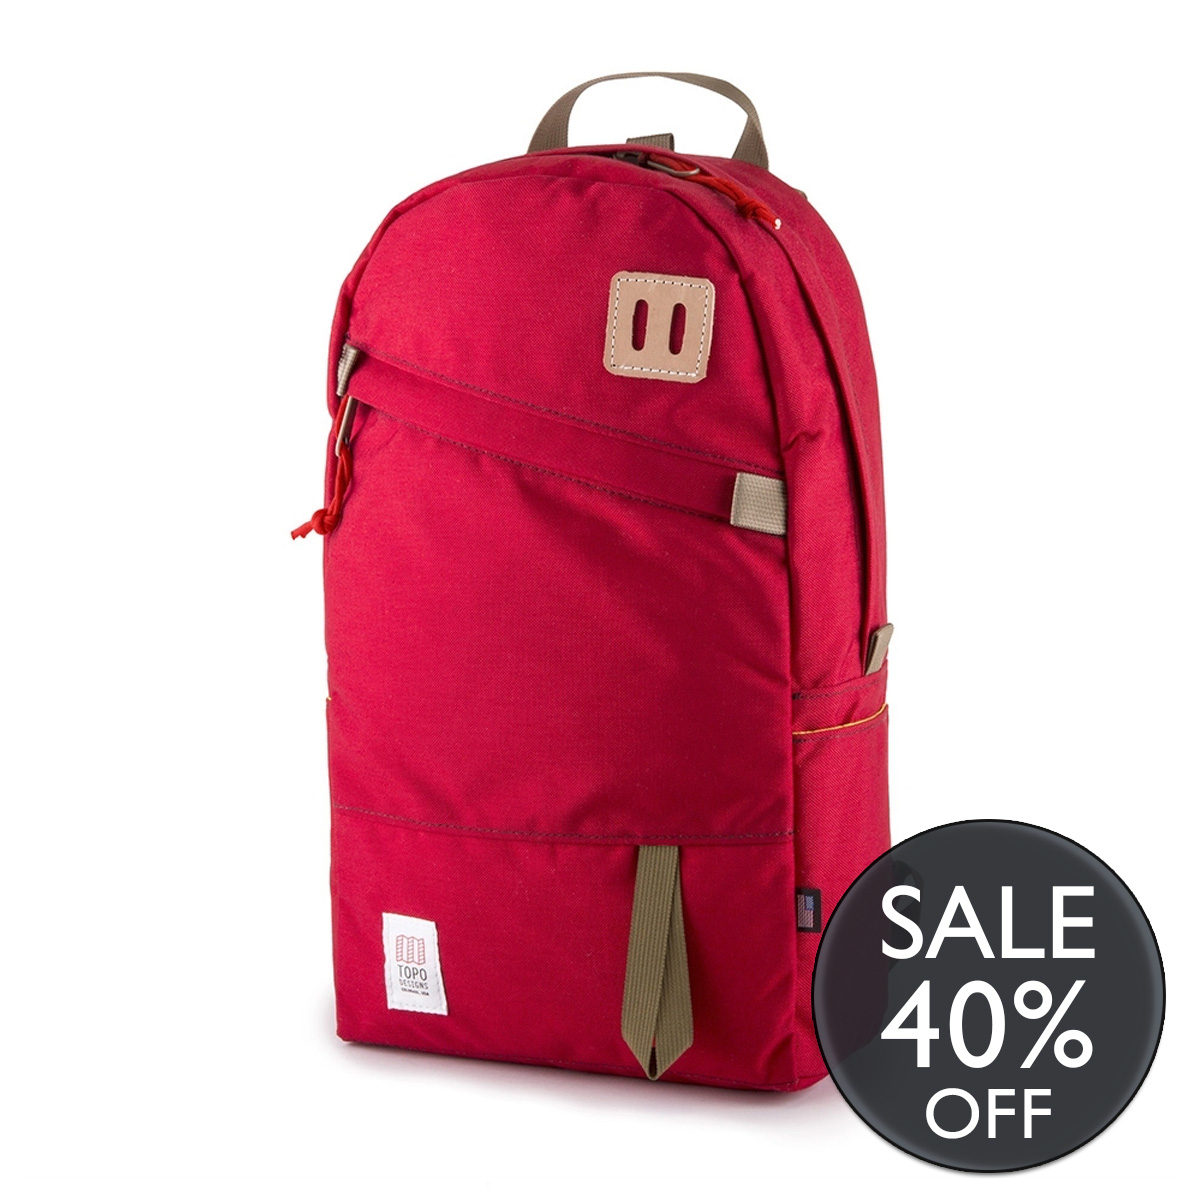 Topo Designs Daypack Red